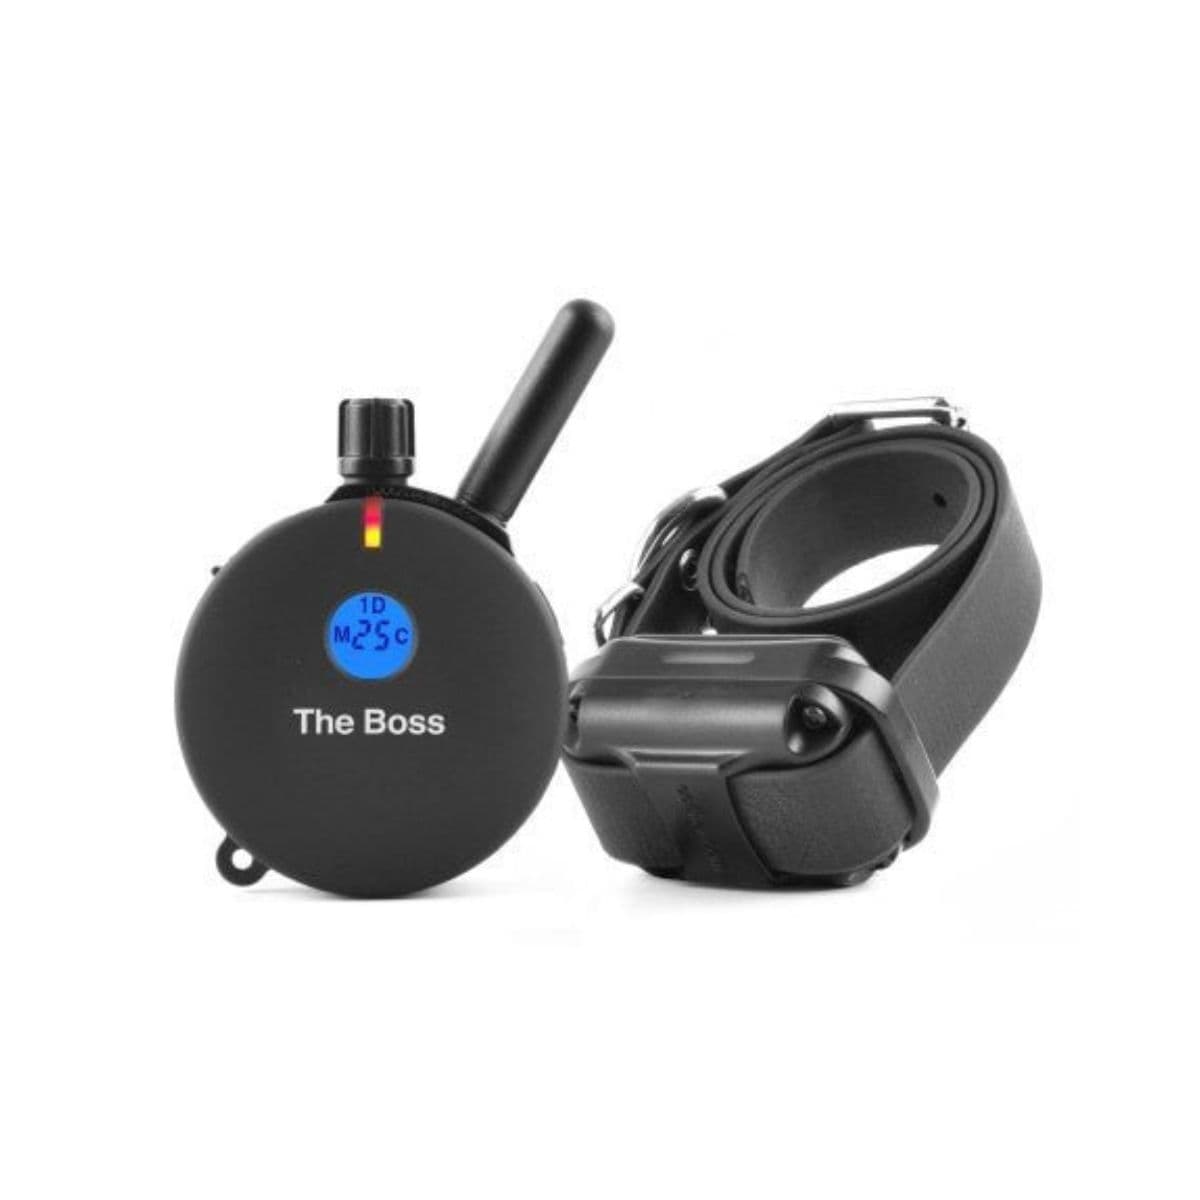 E-Collar ET-800 The Boss 1-Mile Remote Waterproof Training Collar Black